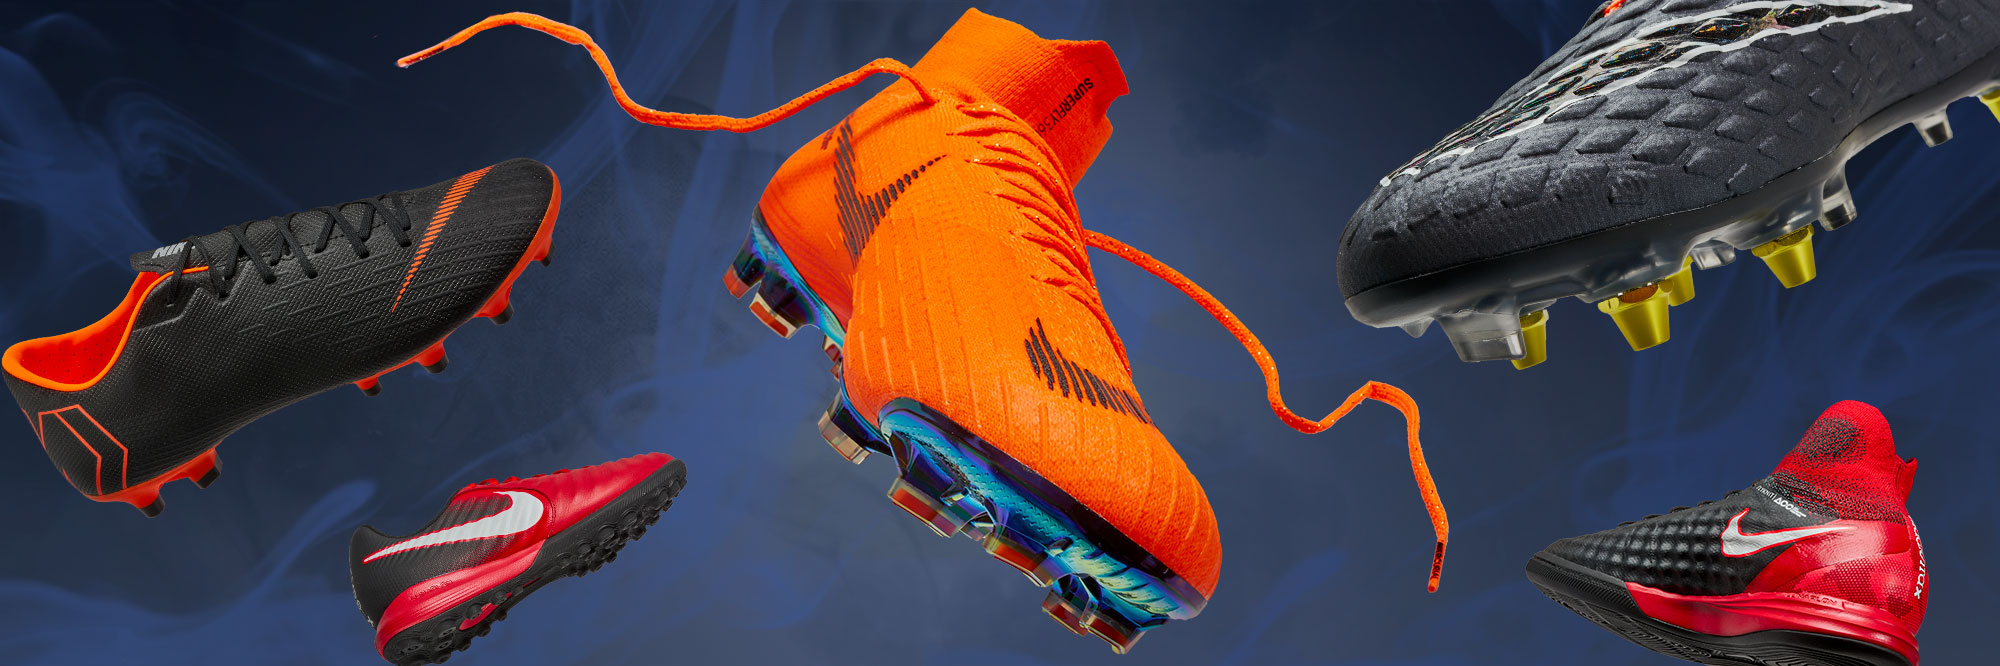 Nike Soccer Shoes - Nike Soccer Cleats at SoccerPro.com